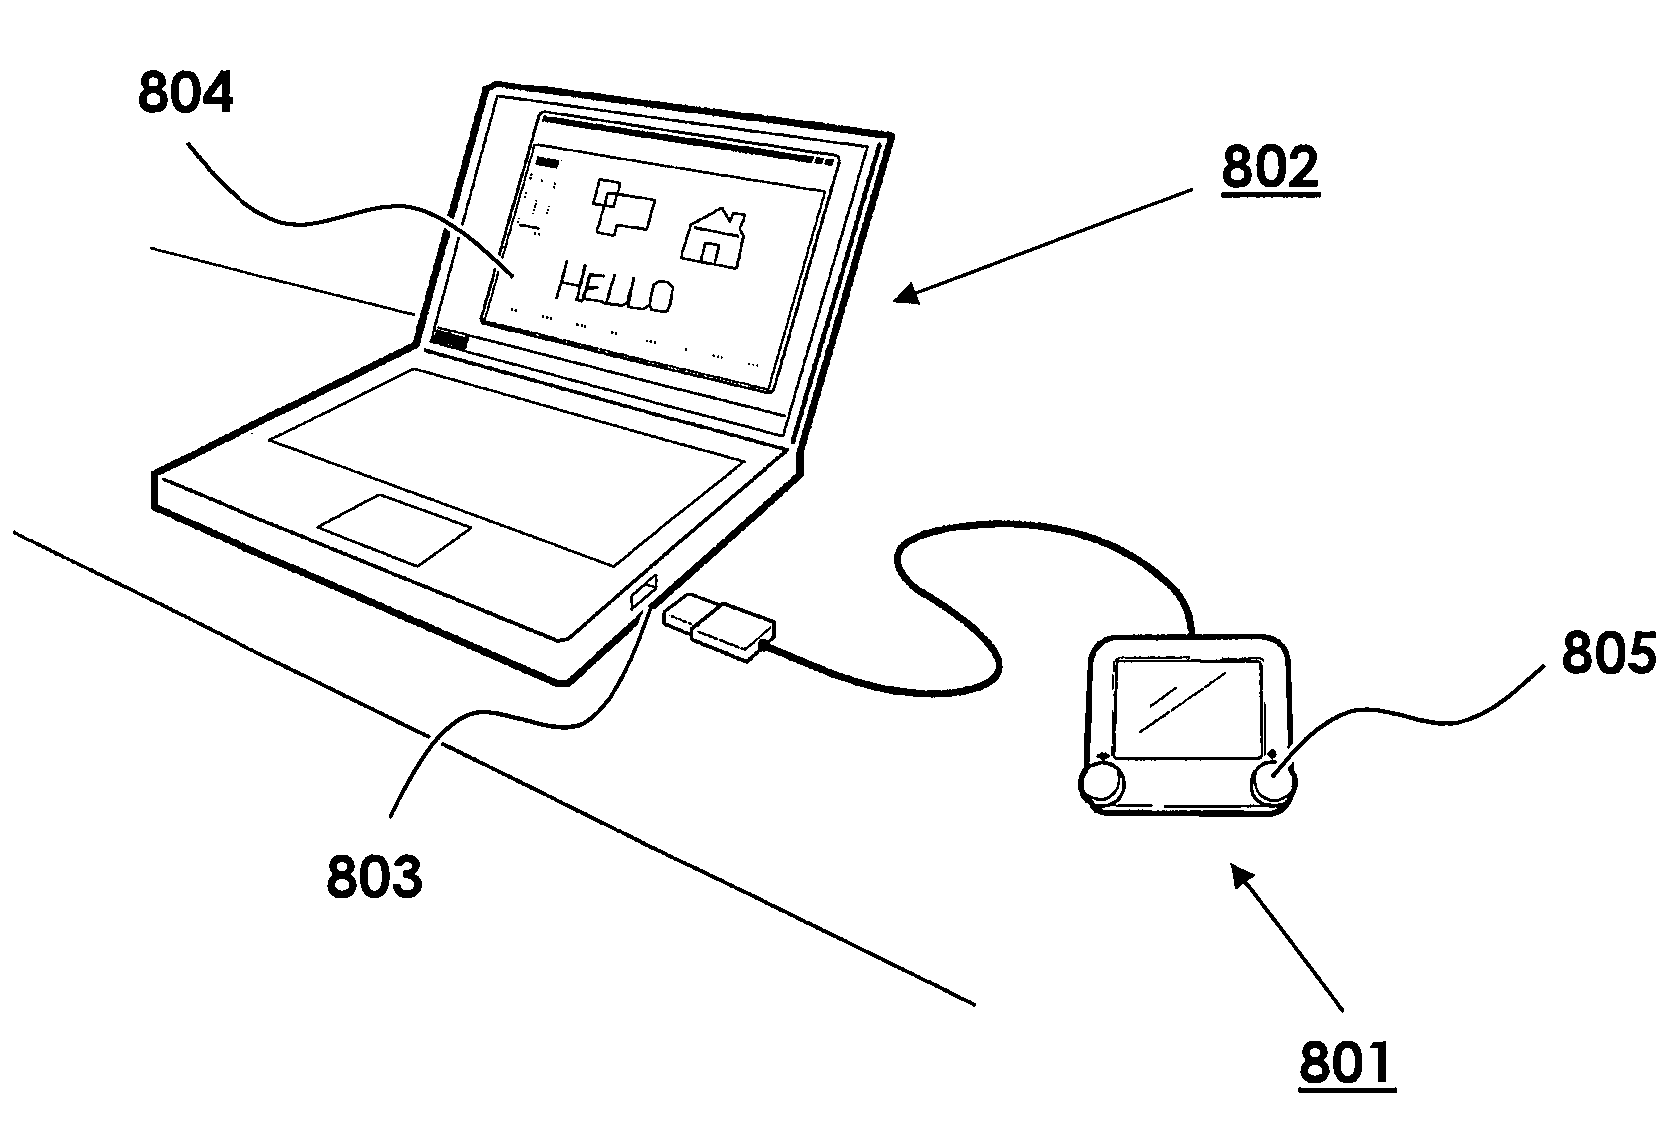 Portable, Computer-Peripheral Apparatus Including a Universal Serial Bus (USB) Connector